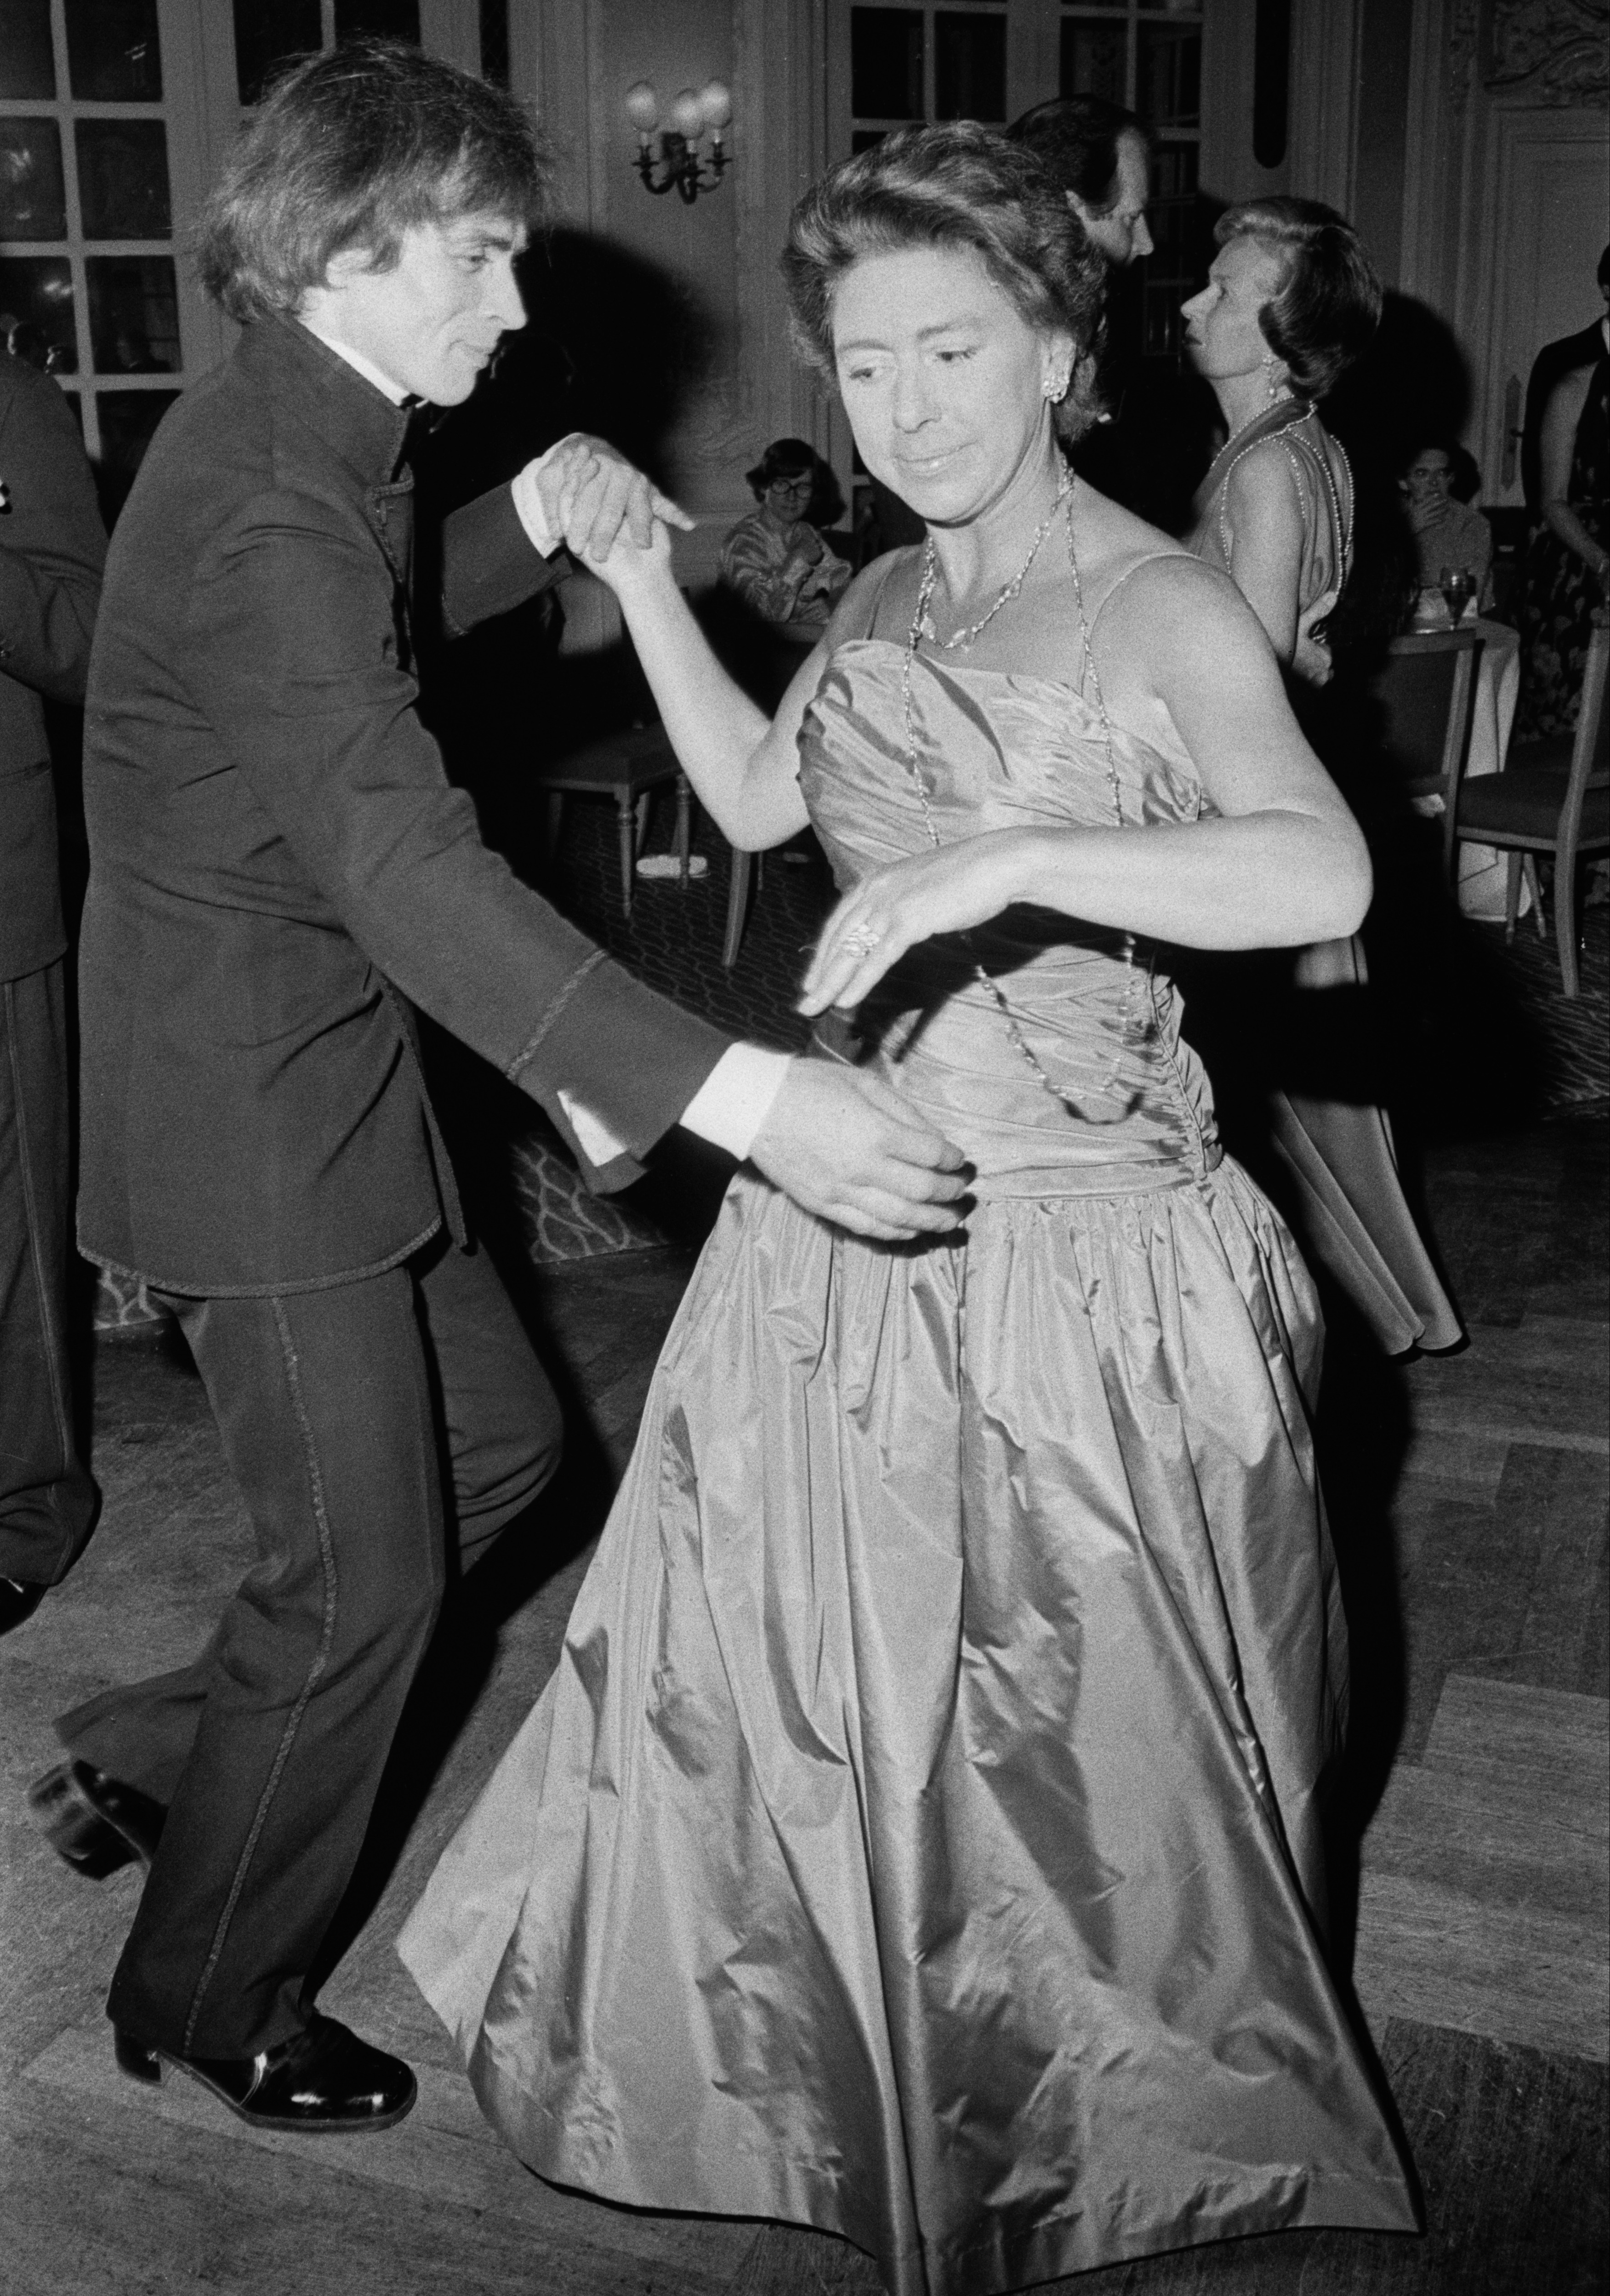 Margaret dances with ballet star Rudolf Nureyev at a party in June 1977